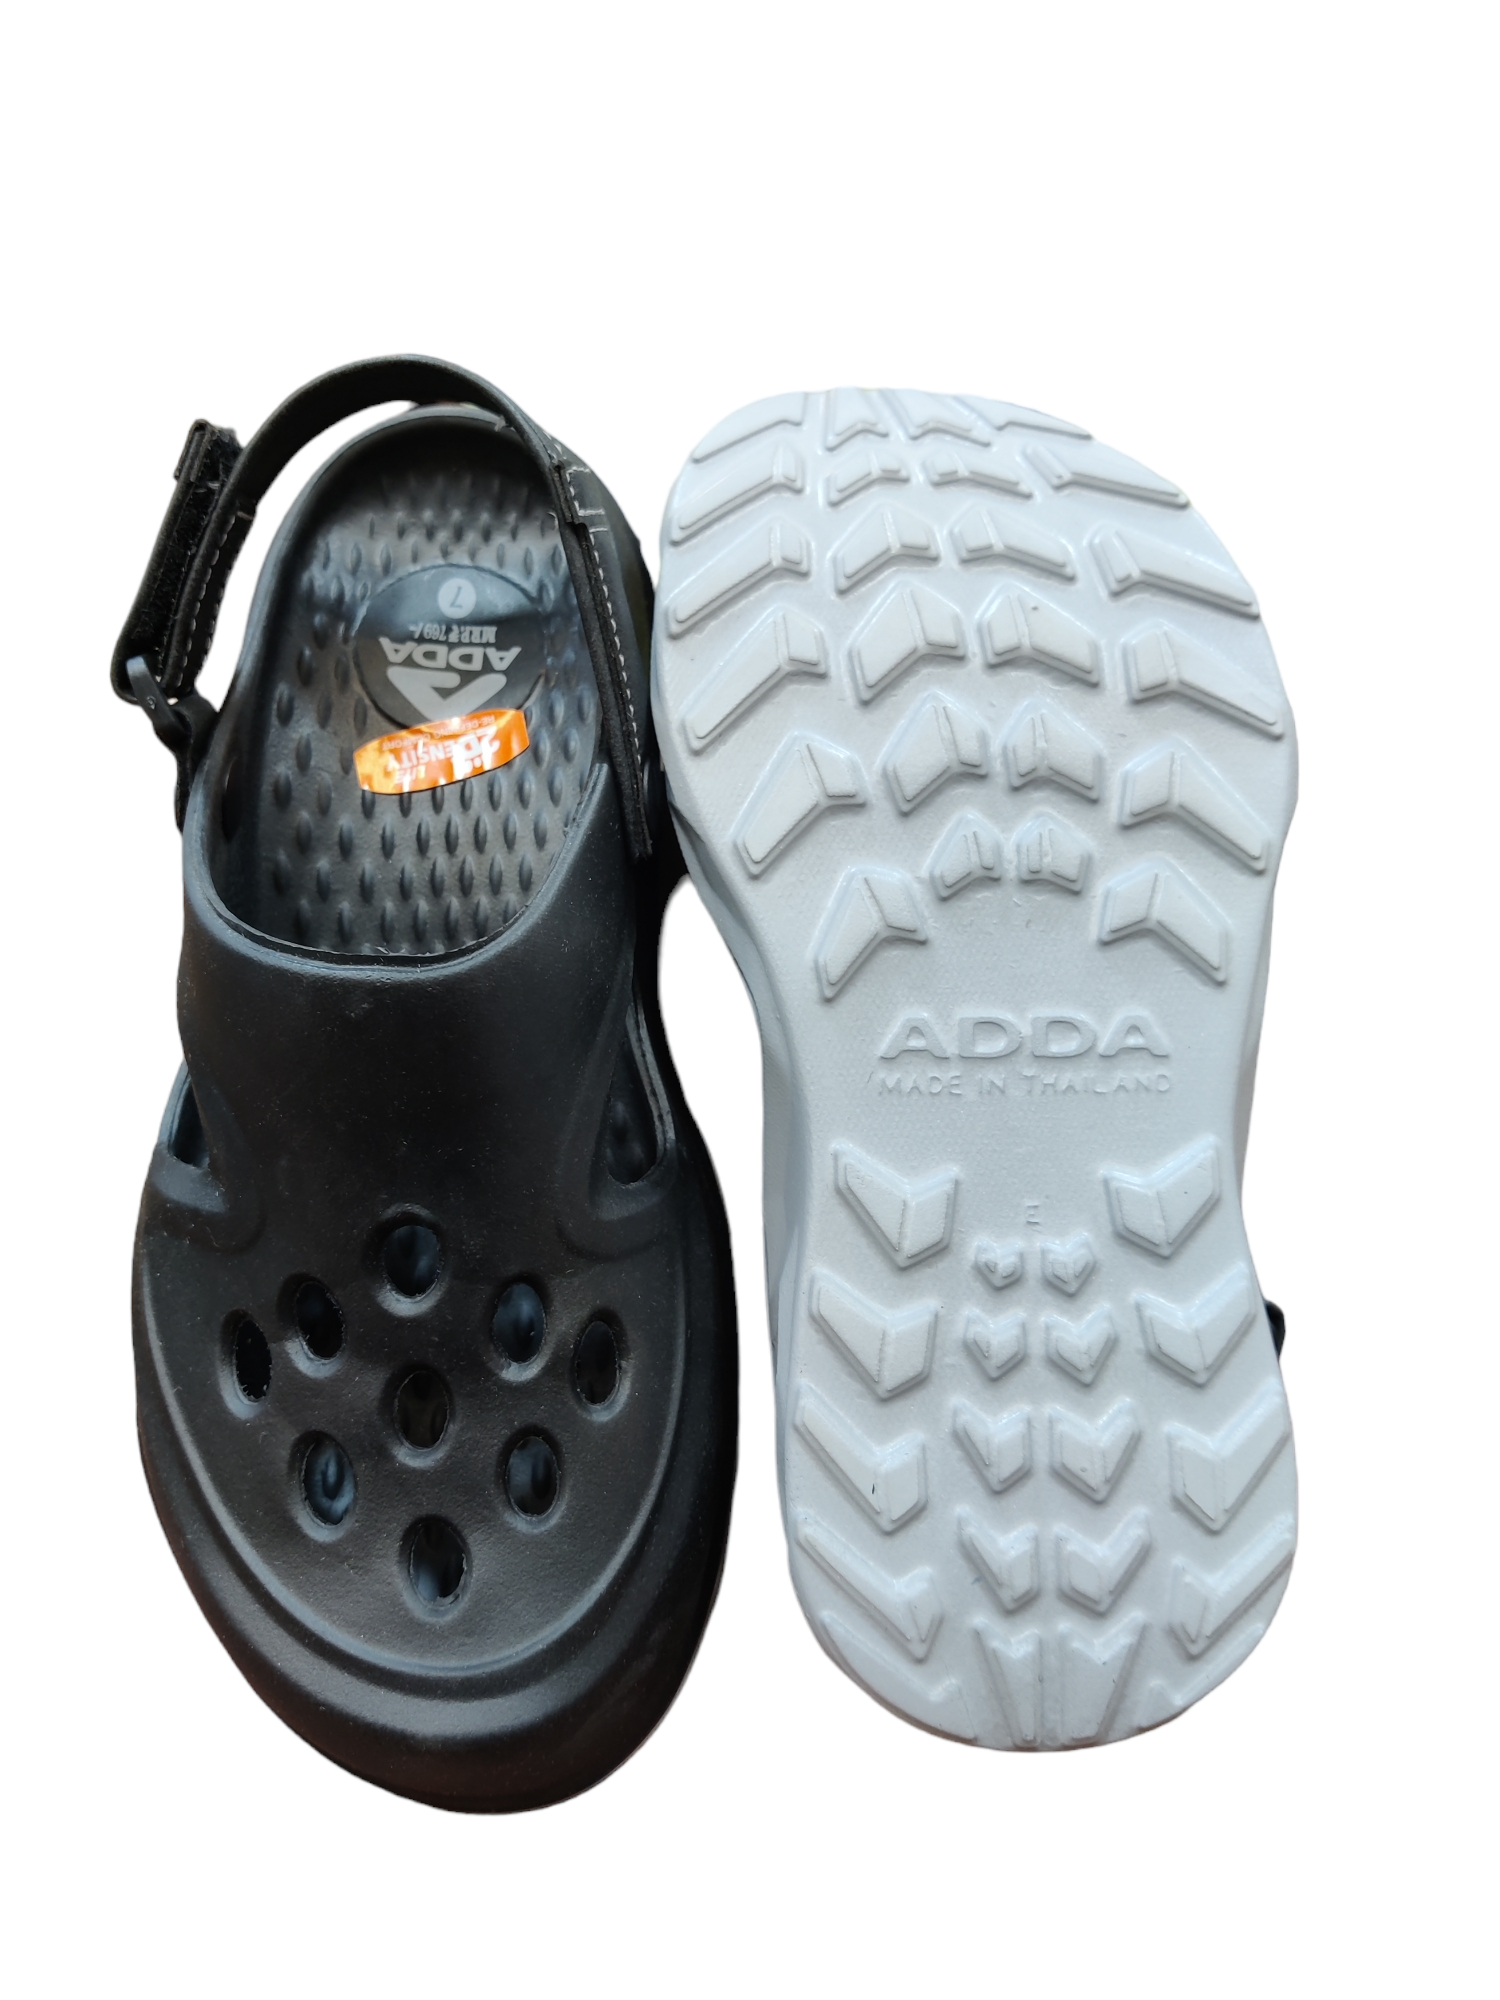 Adda Flip Flops - Buy Adda Flip Flops Online at Best Price - Shop Online  for Footwears in India | Flipkart.com